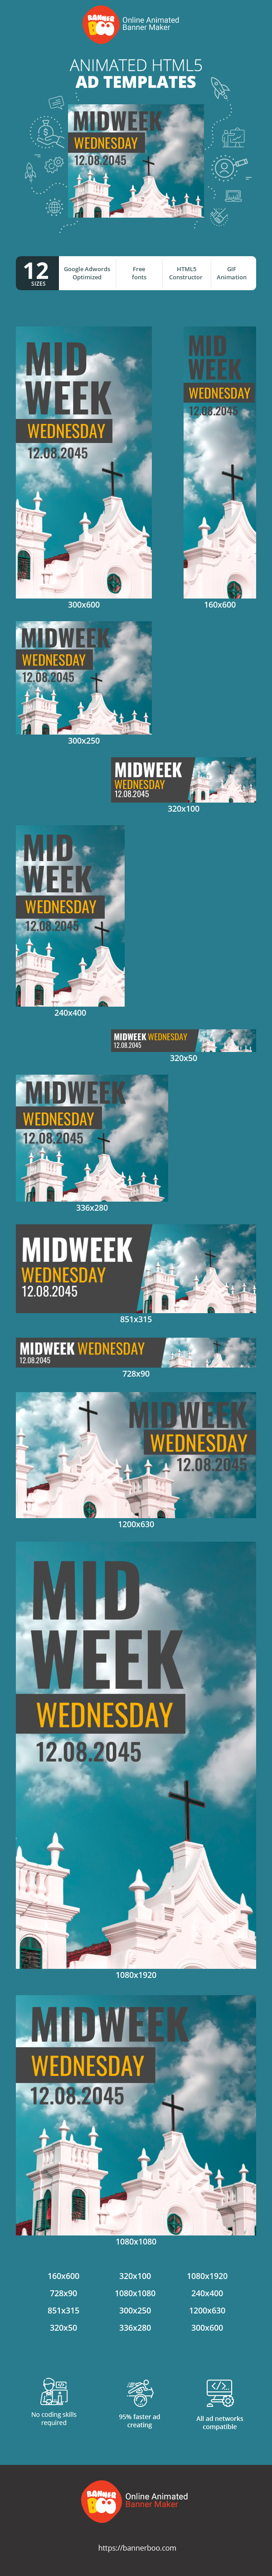 Szablon reklamy banerowej — Midweek Wednesday — 12.08.2045 Church